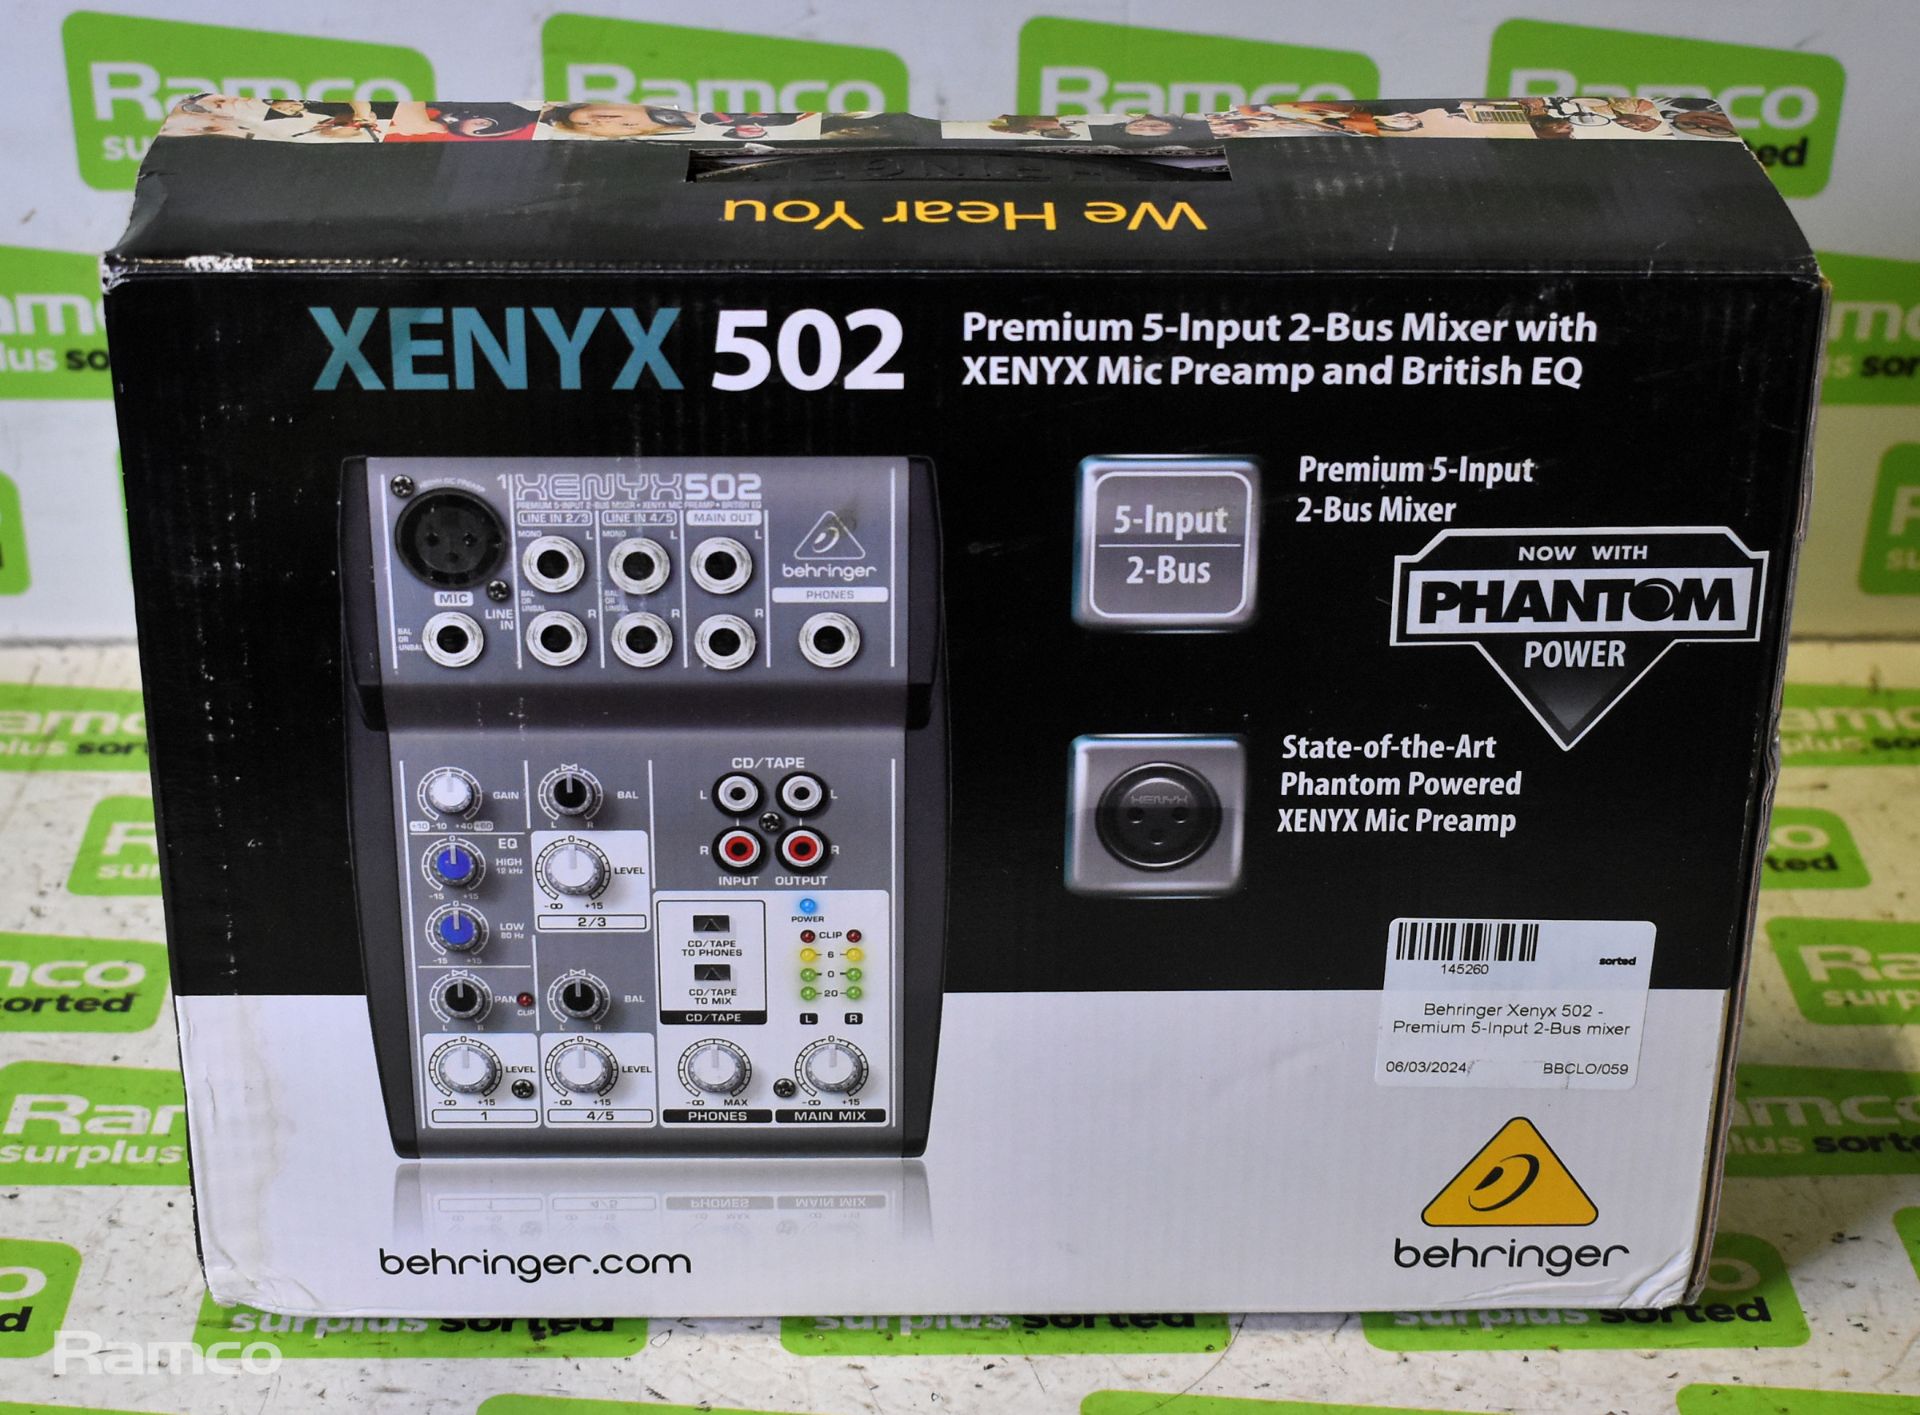 Behringer Xenyx 502 - Premium 5-Input 2-Bus mixer - Image 6 of 6